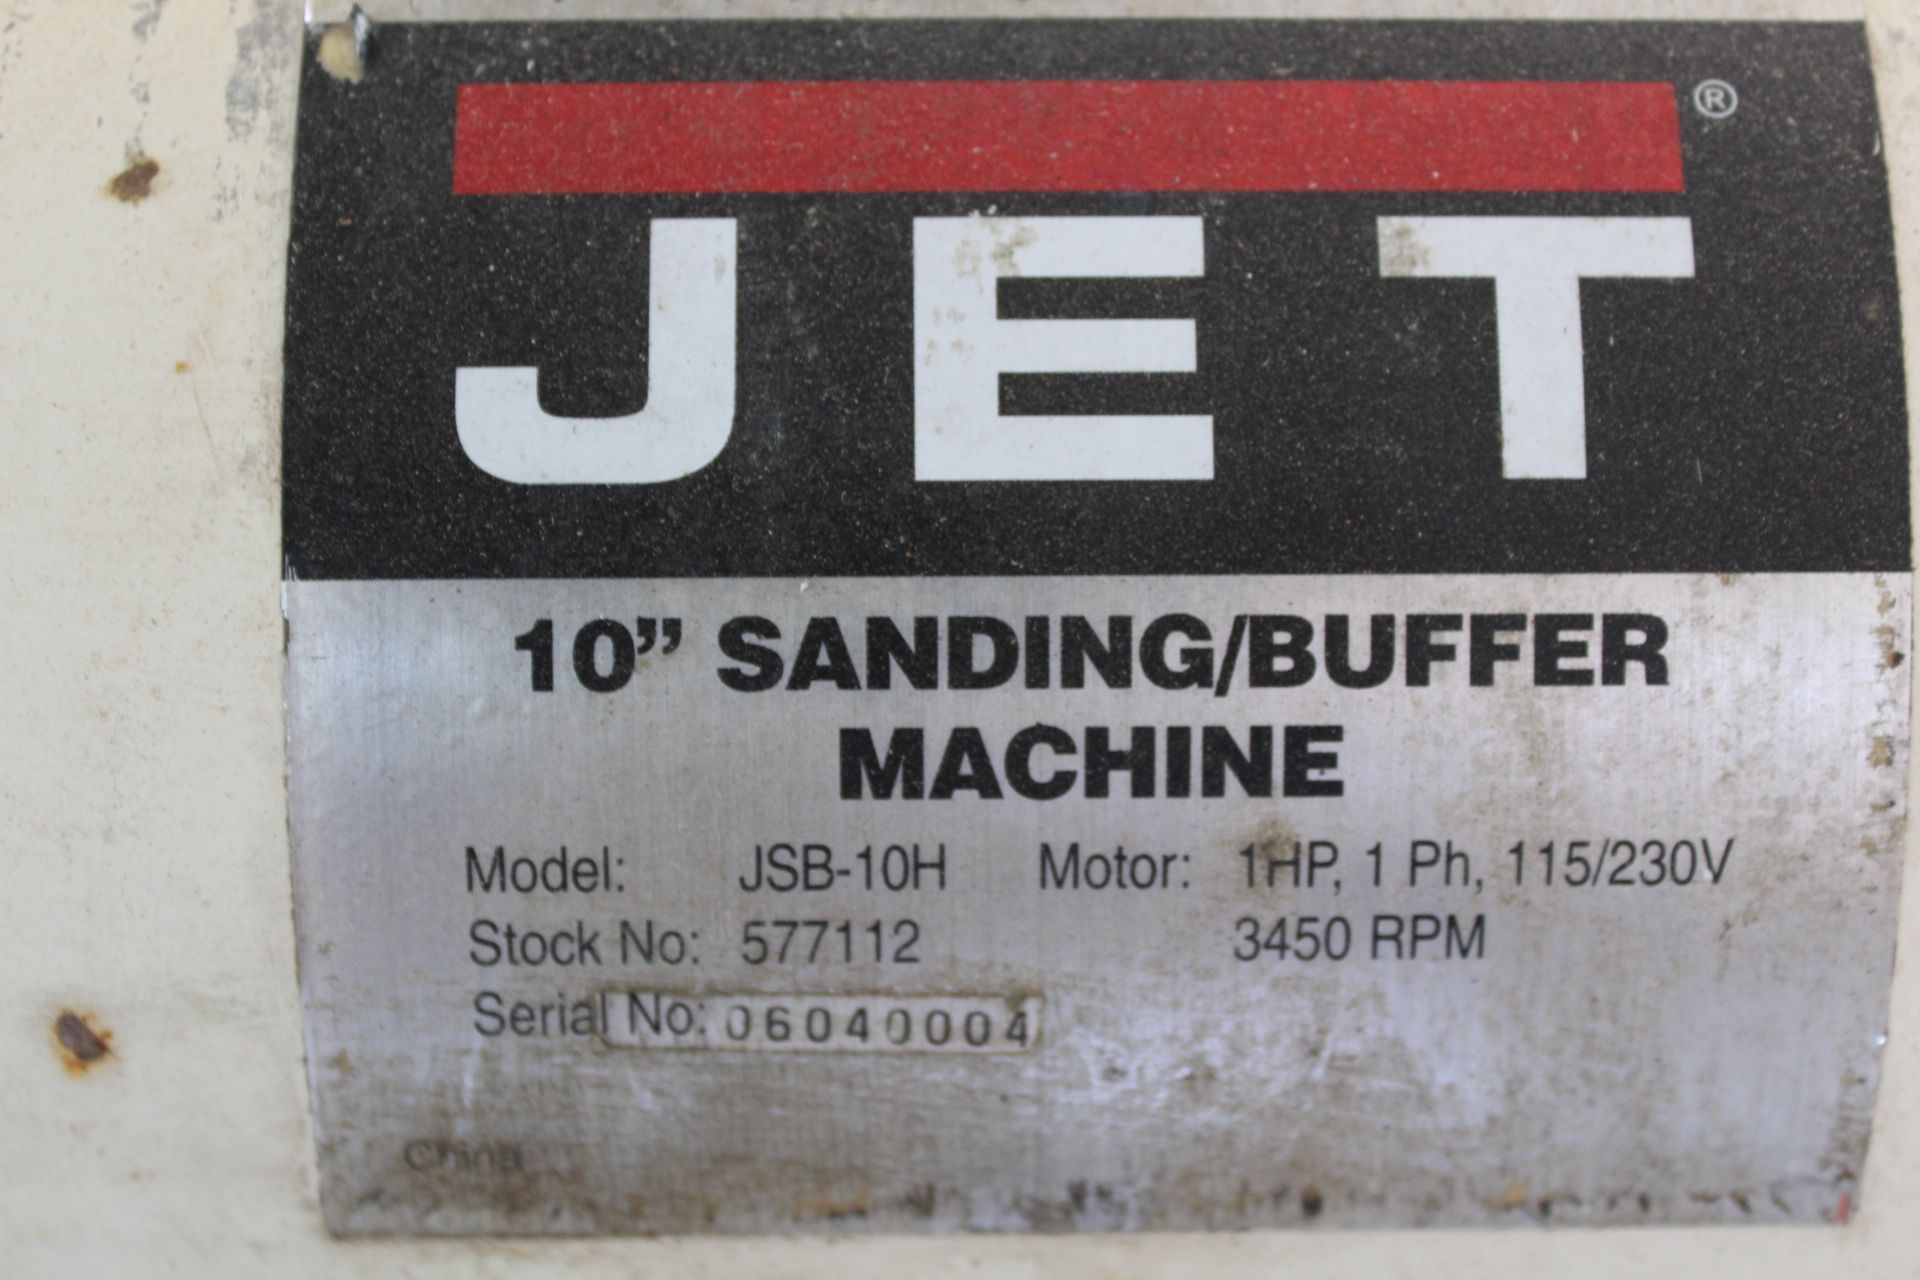 Jet Model JSB-10H 10" Sanding/Buffer Machine on Stand, 1HP, 3450 RPM, 115/230V, 1-Phase - Image 2 of 3